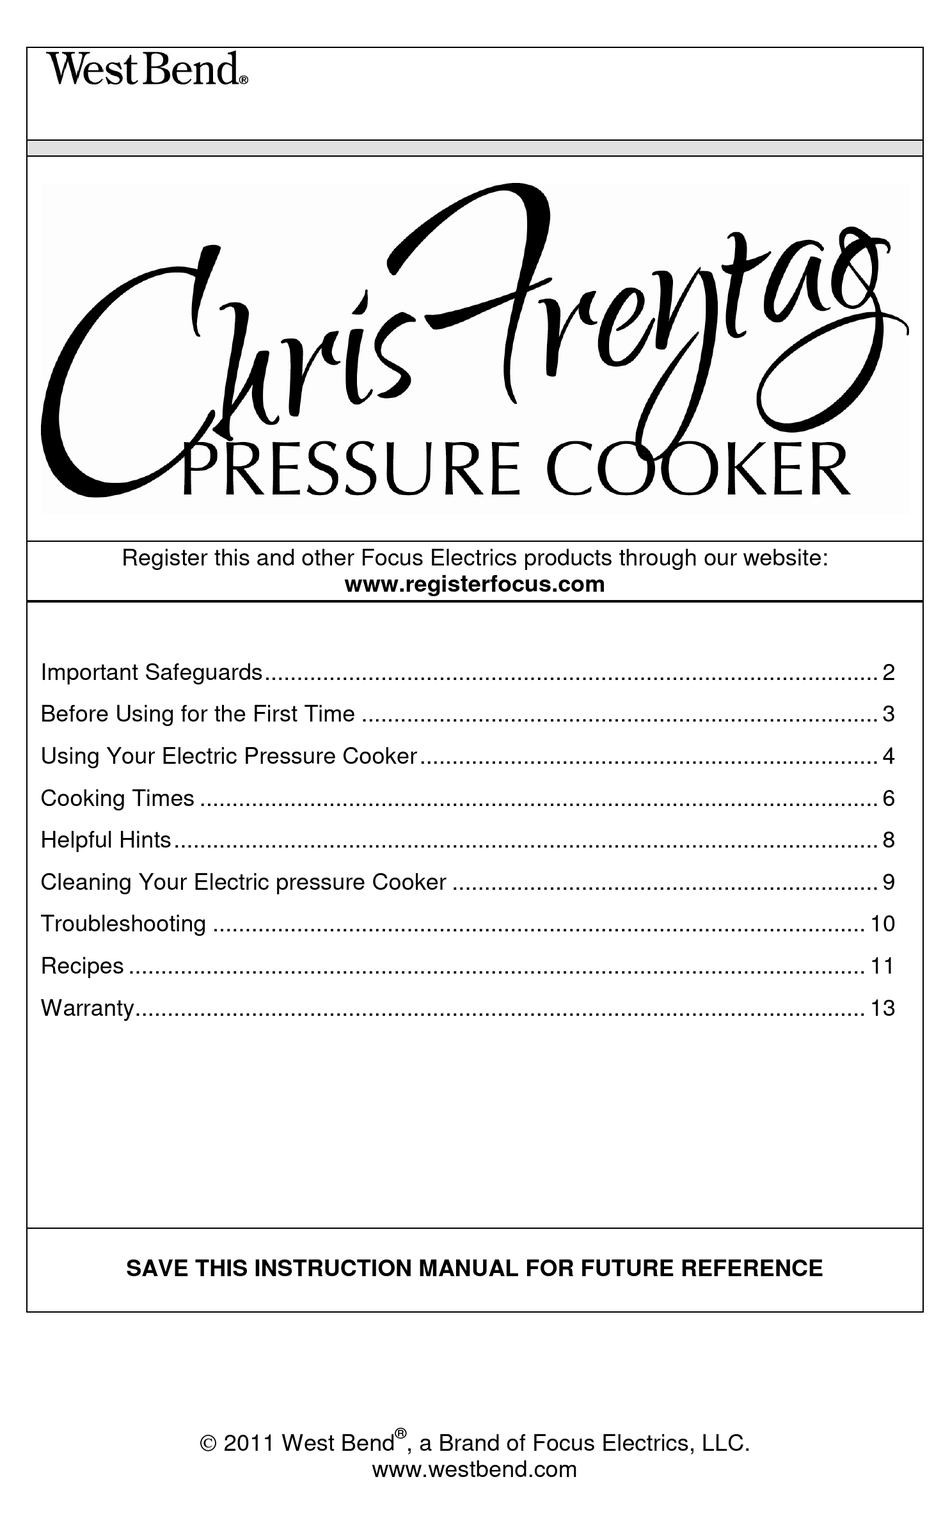 West bend ELECTRIC PRESSURE COOKER Manuals